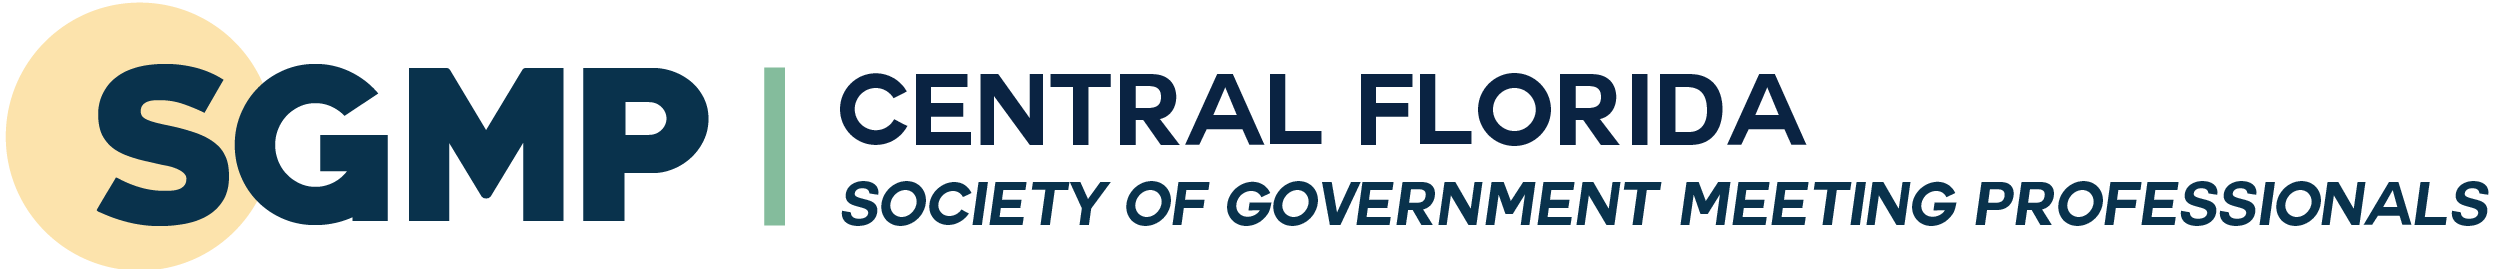 Logo for SGMP Central Florida